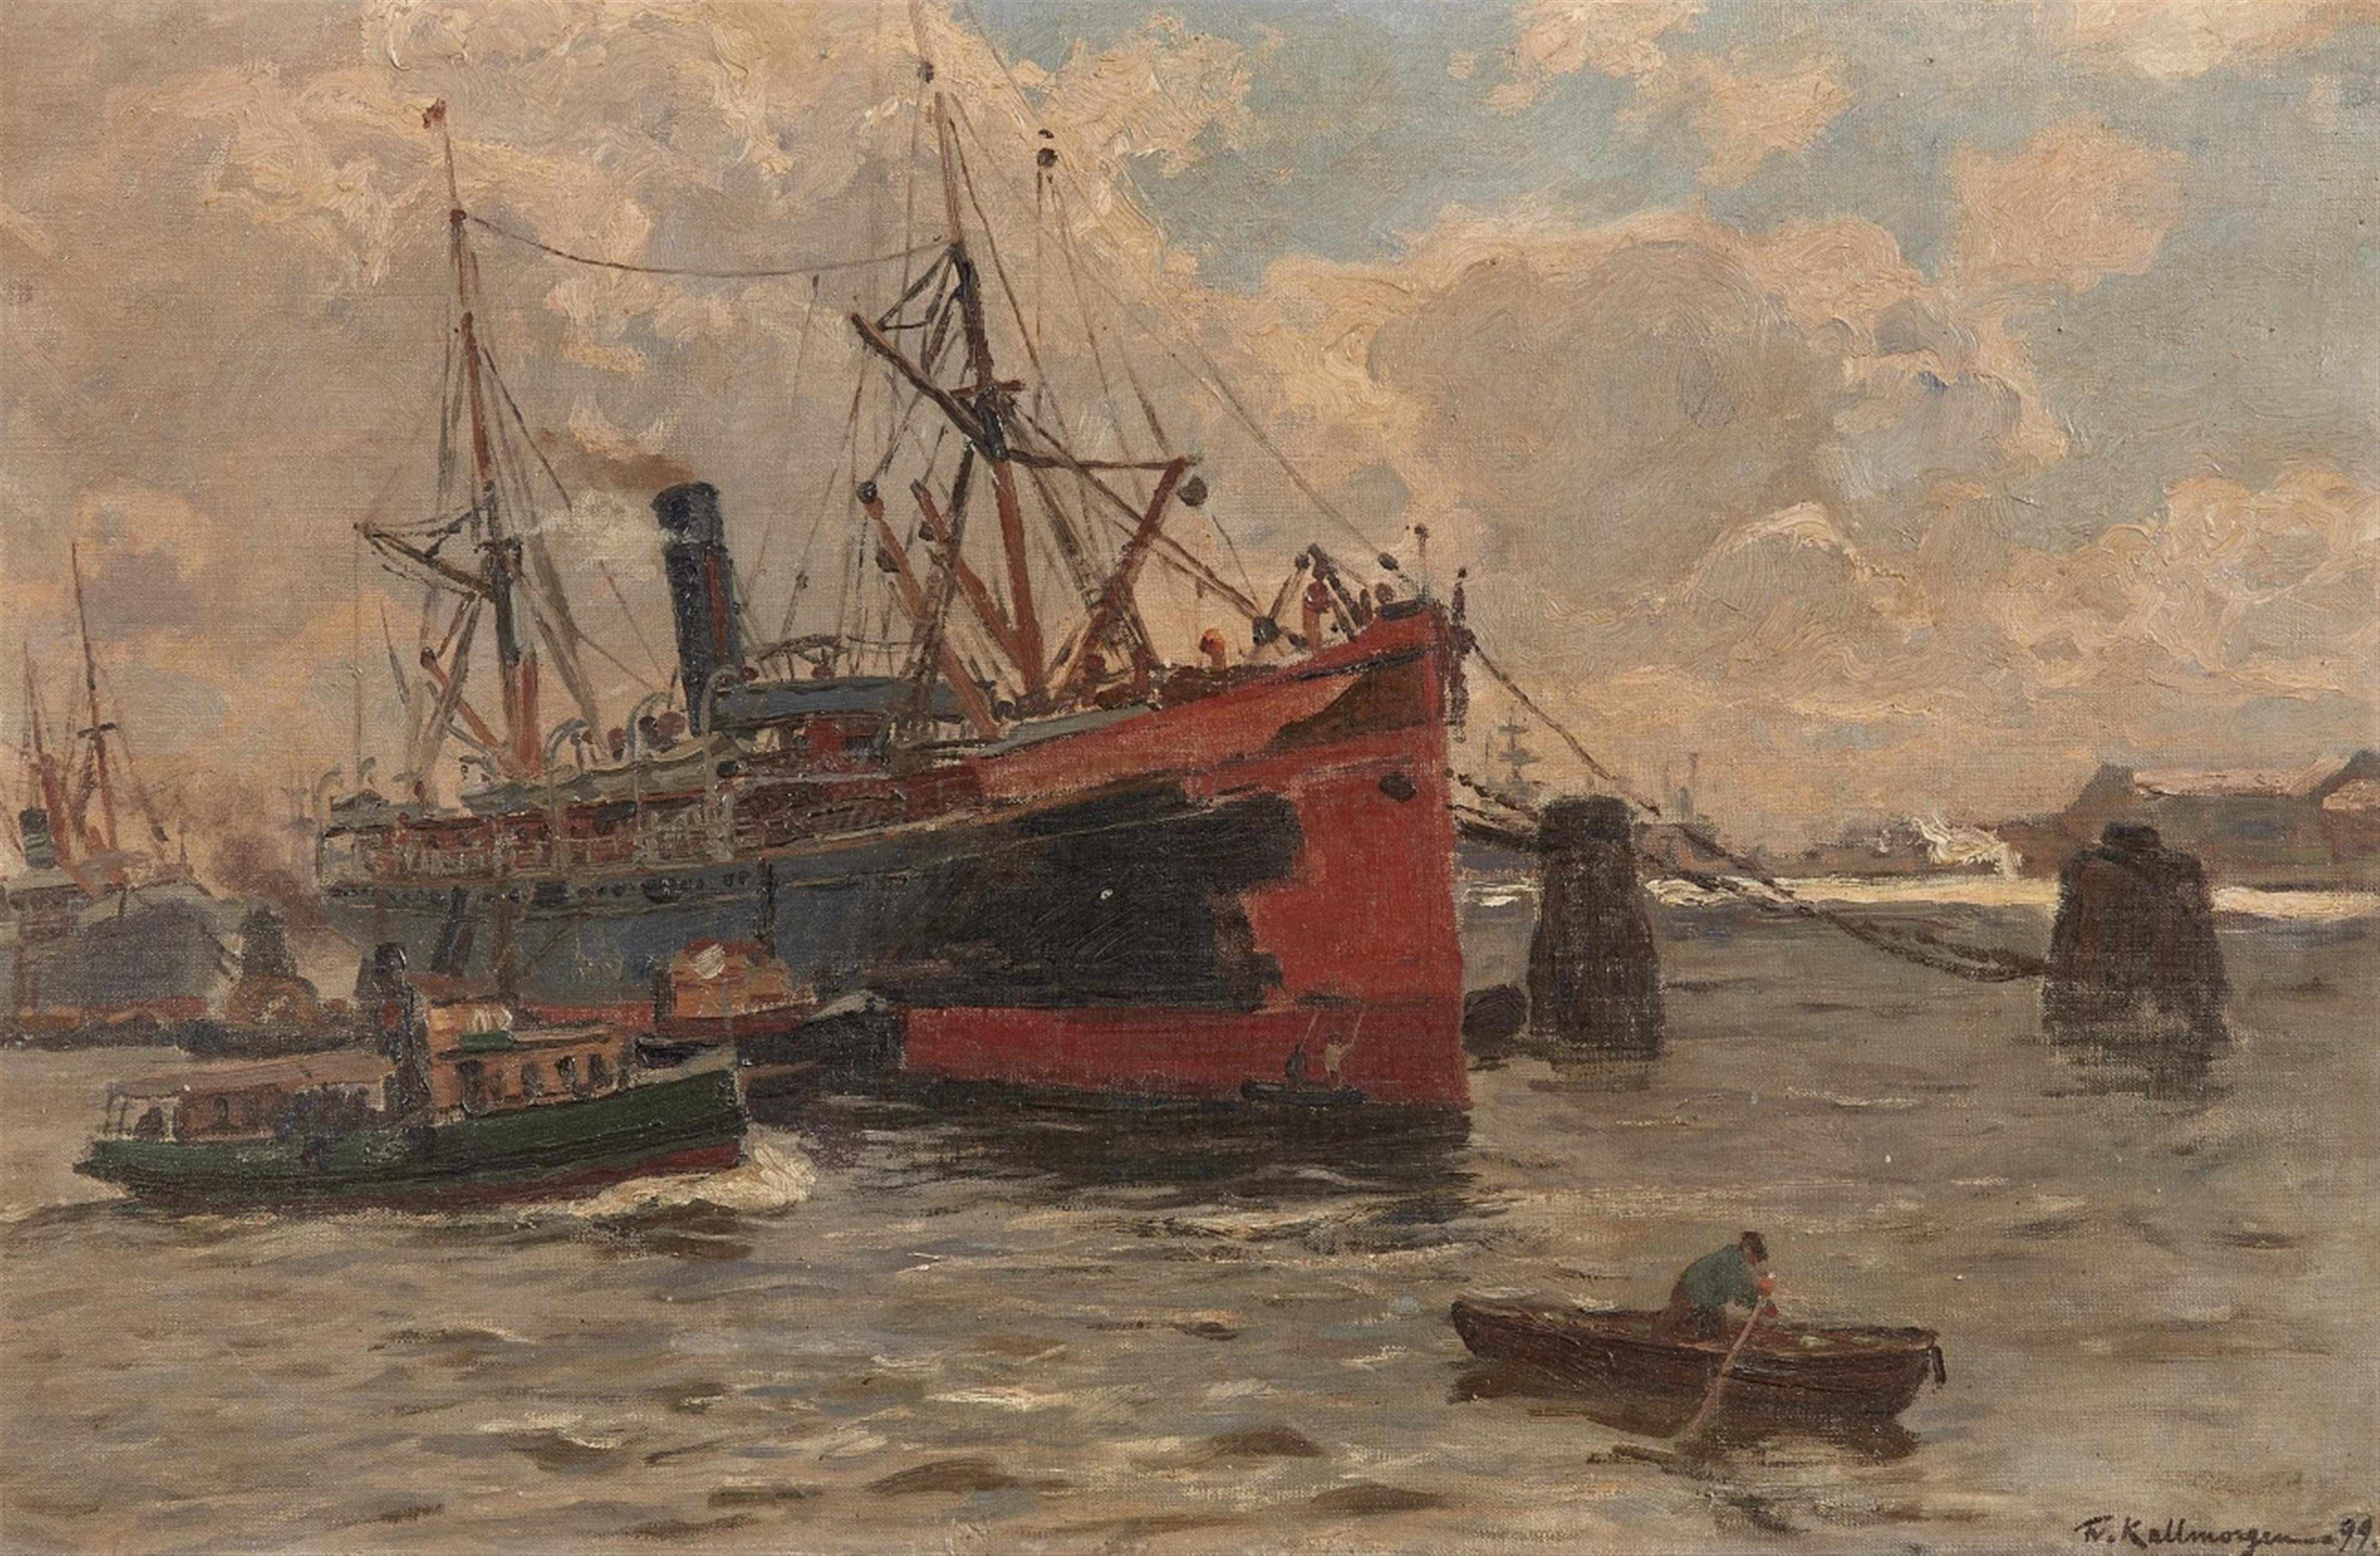 Friedrich Kallmorgen - A South American Steam Ship in Hamburg Harbour - image-1